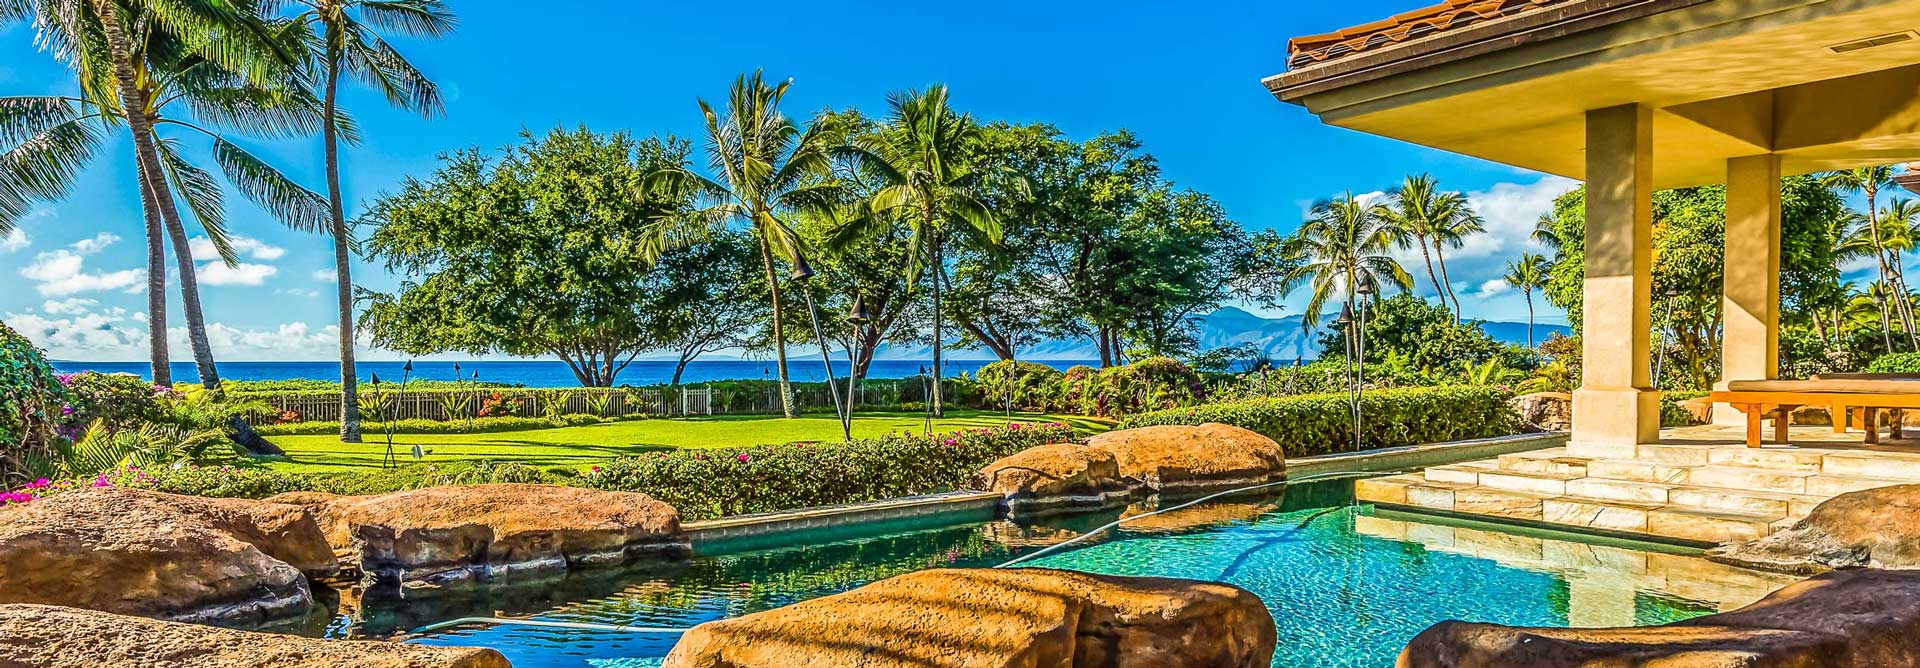 Long & Associates AIA Maui Architect Design Interiors Oceanfront Luxury